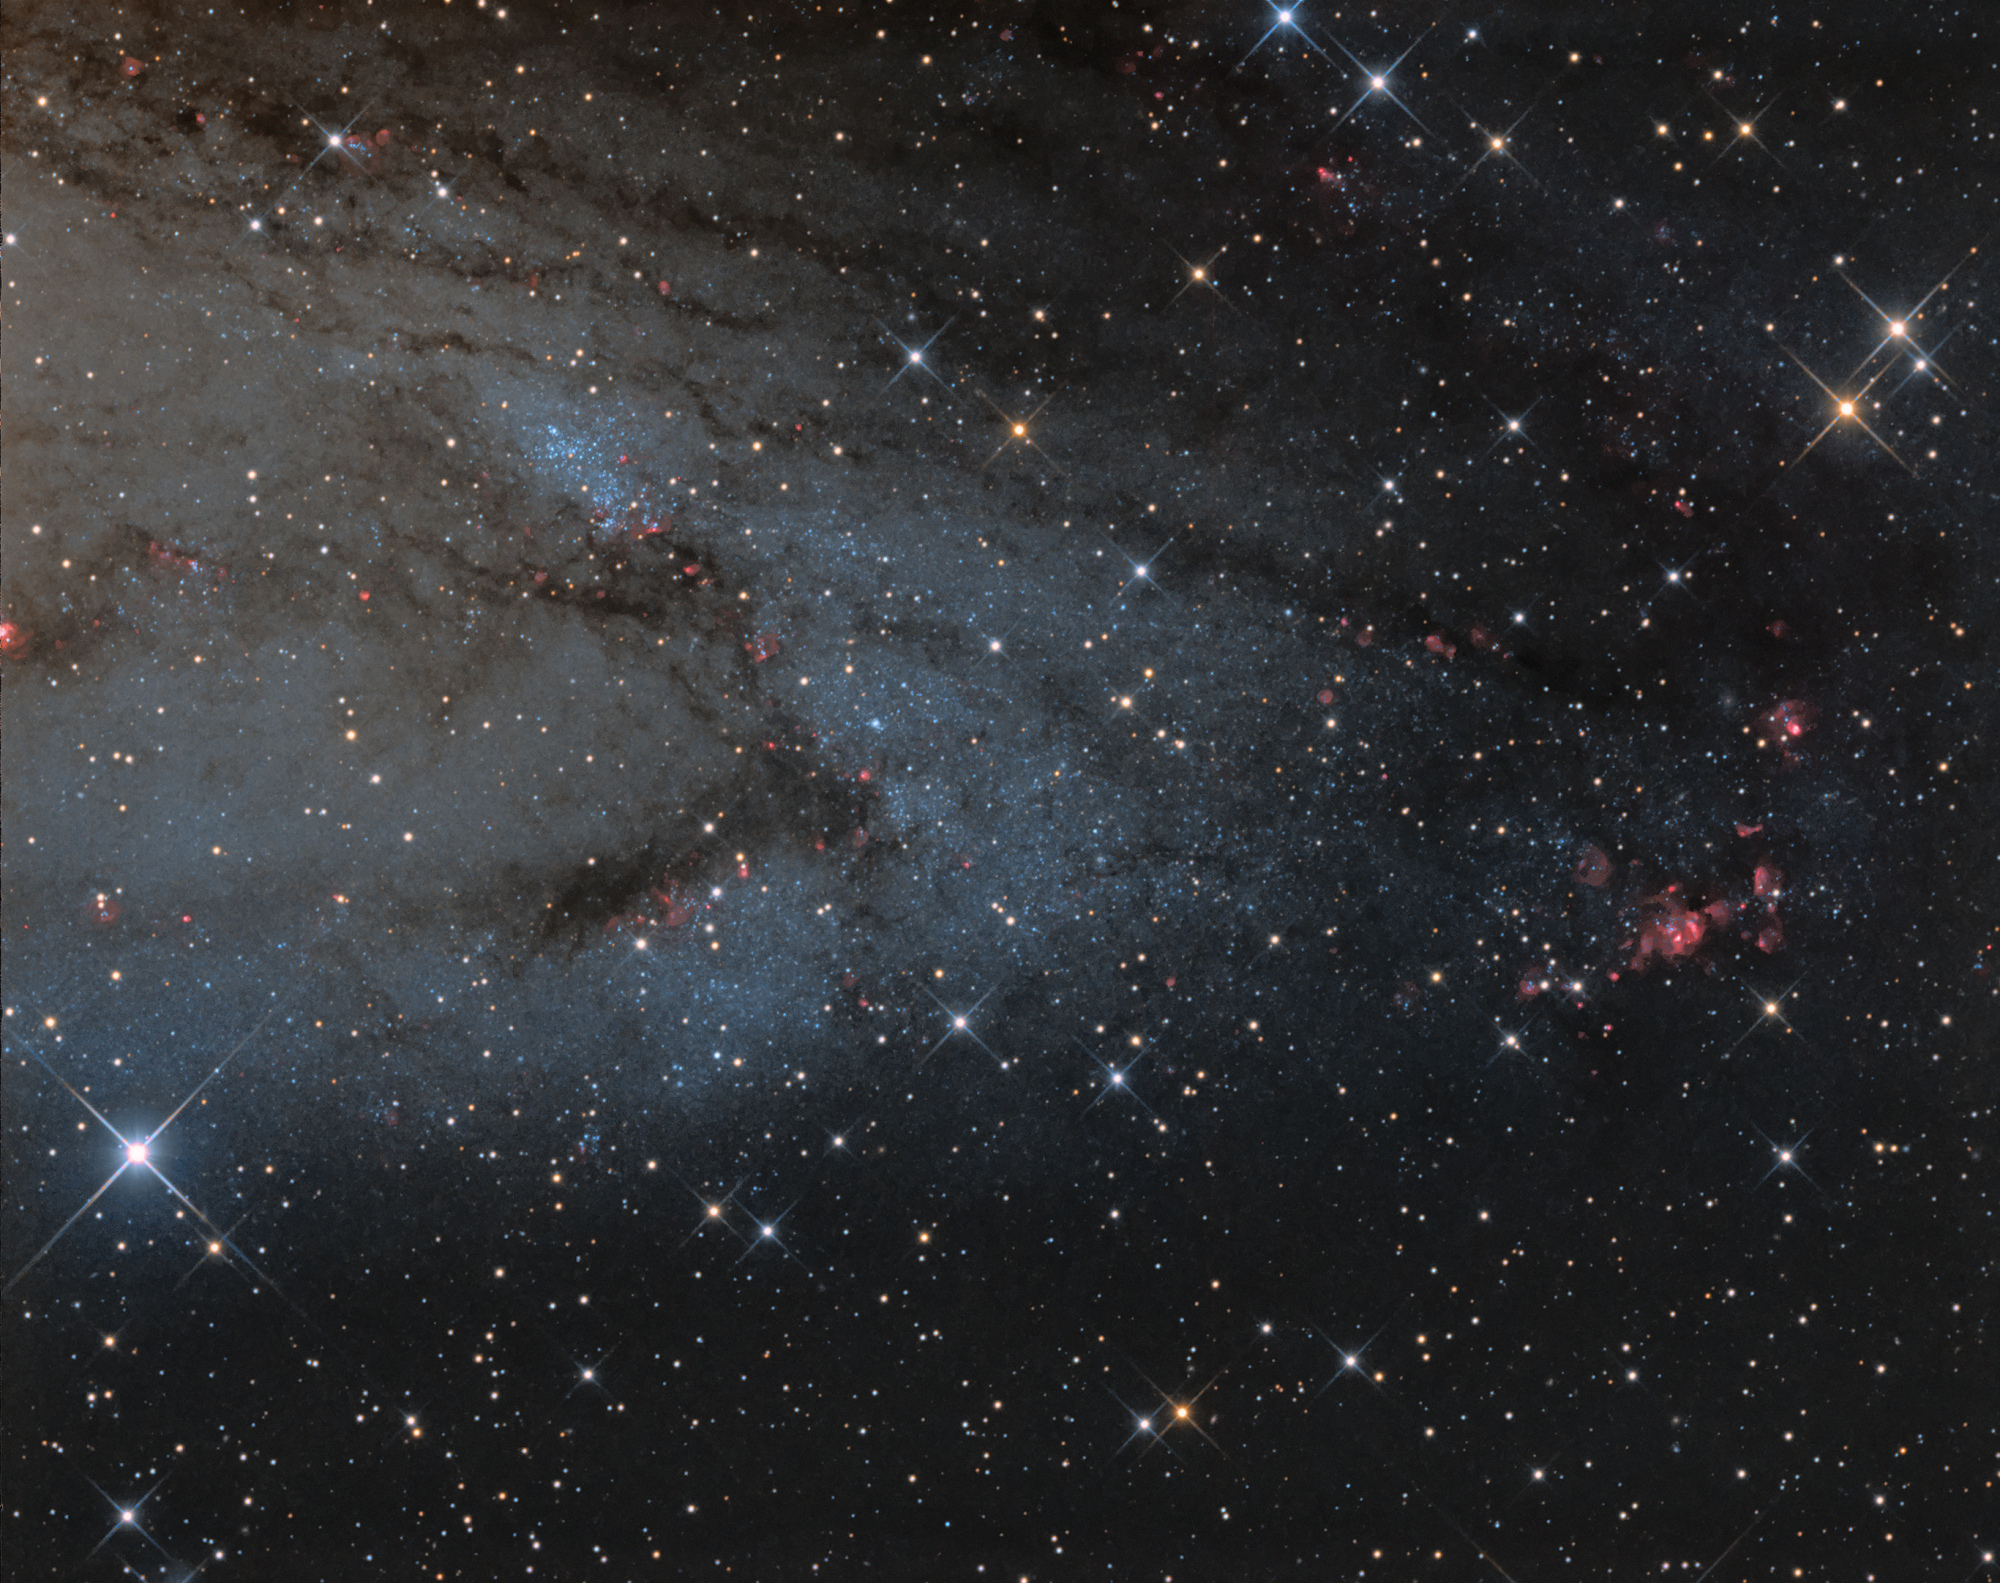 NGC206.jpg